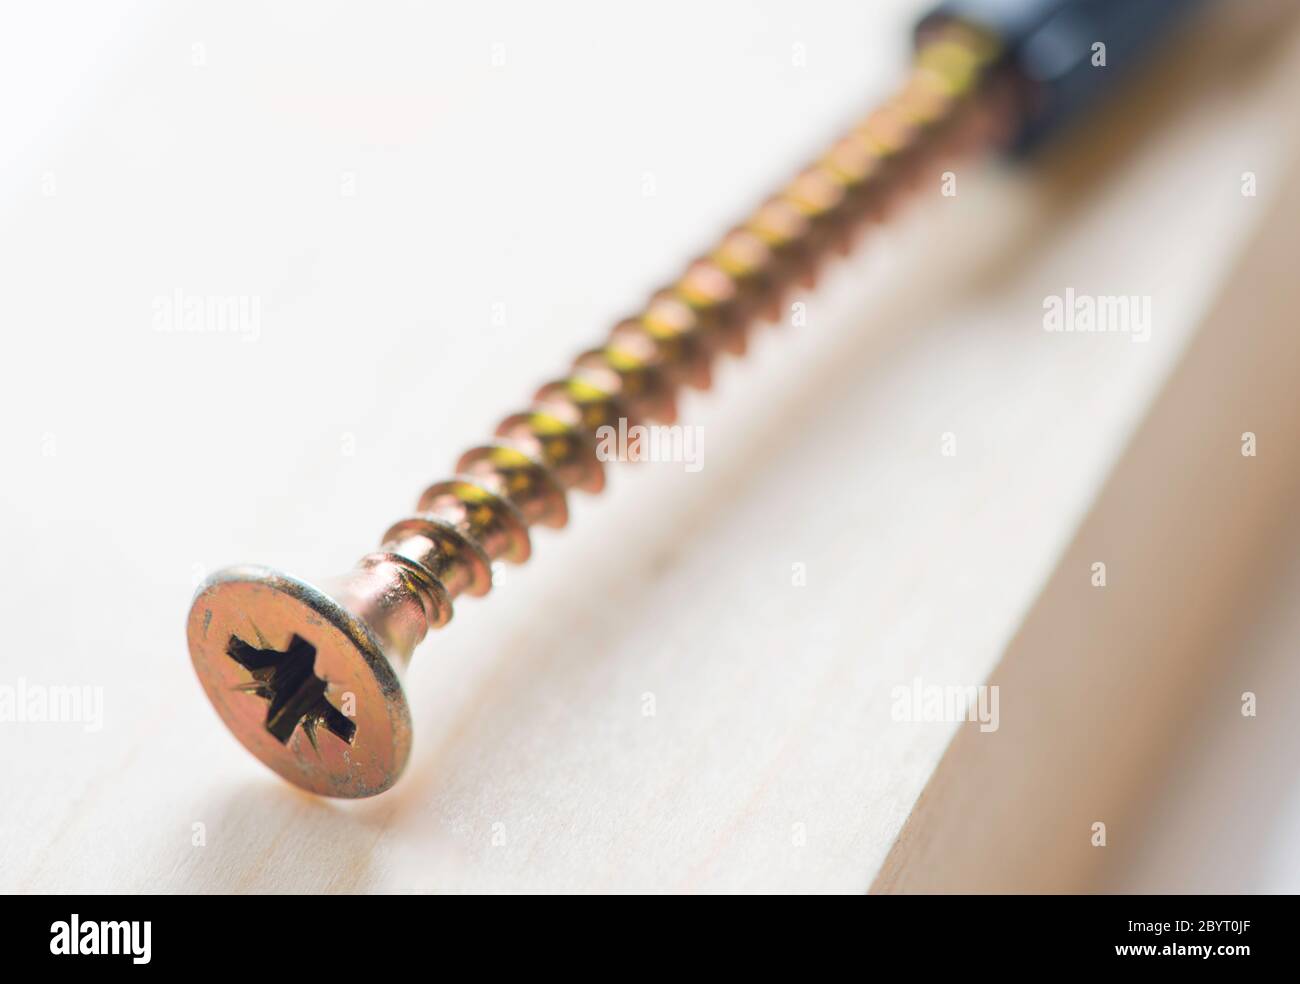 Close up of a crosshead screw in a rawlplug Stock Photo